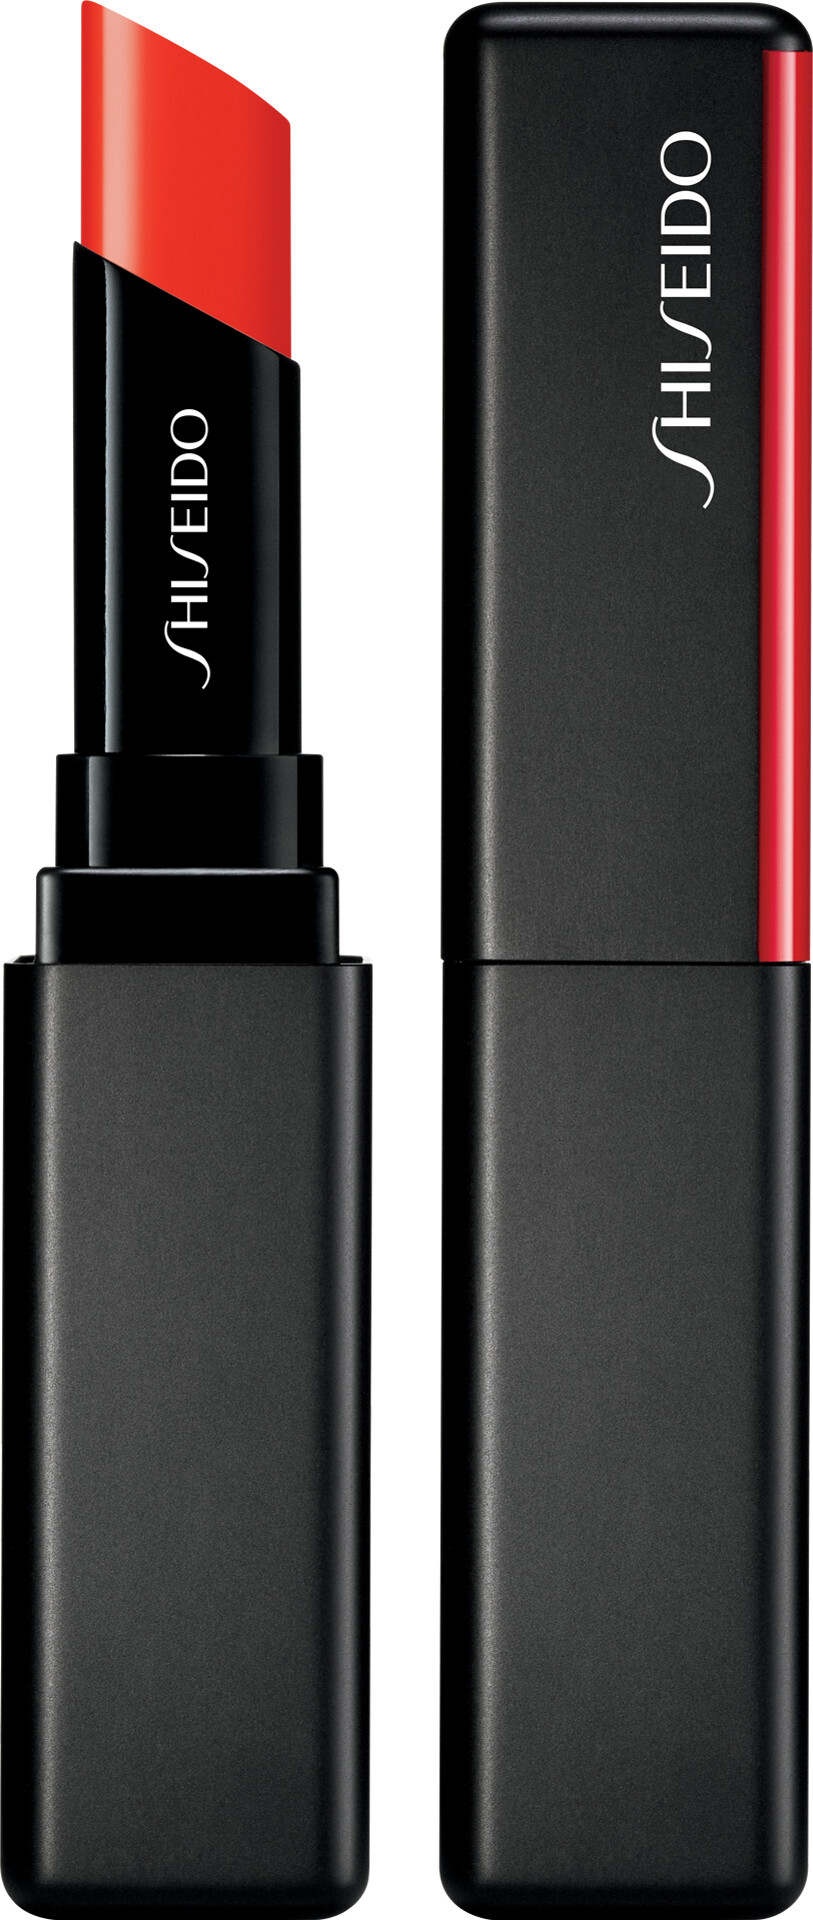 Shiseido ColorGel LipBalm 2g 112 - Tiger Lily